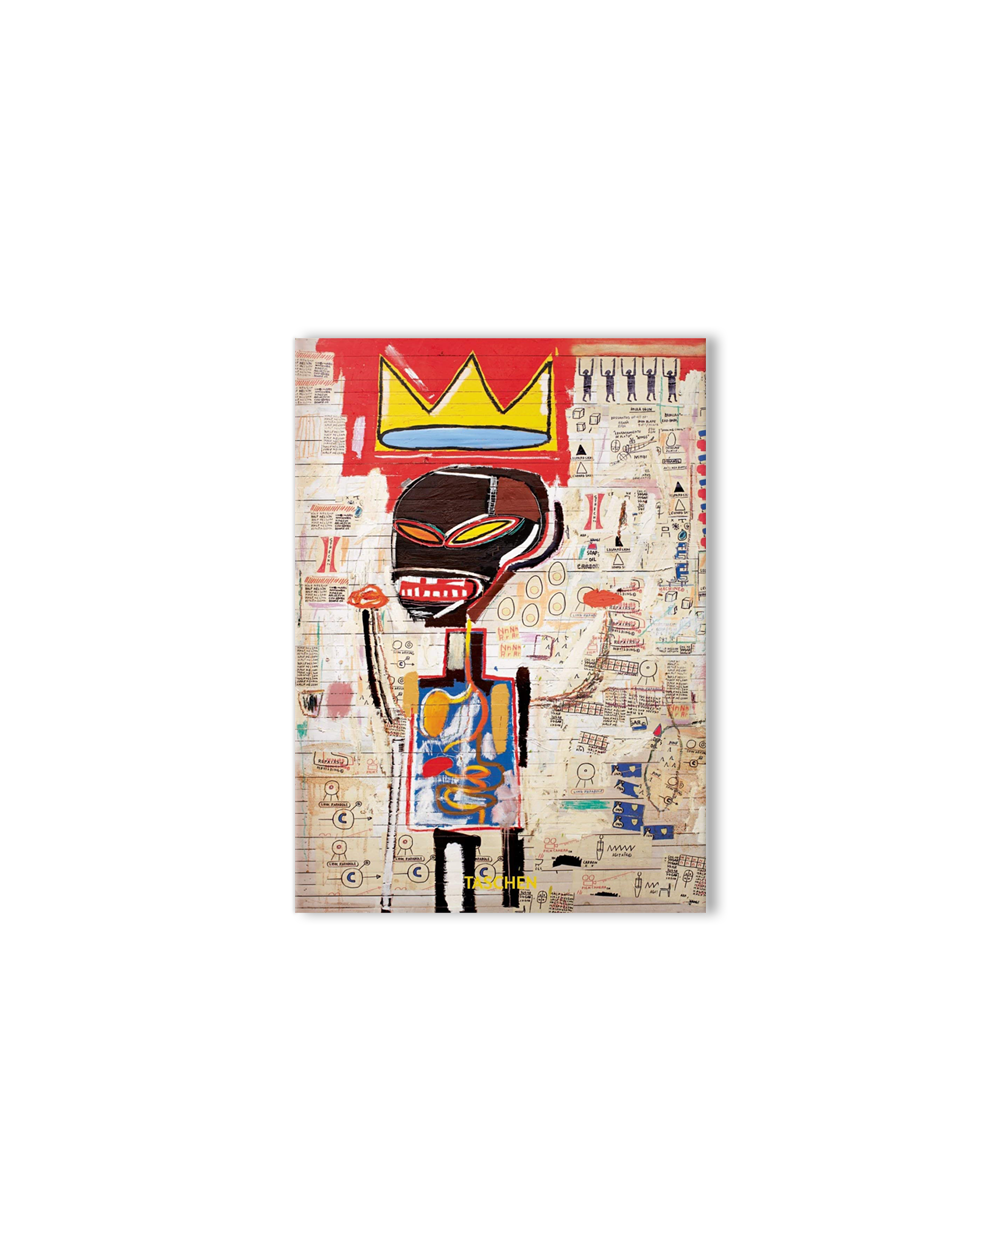 Jean-Michel Basquiat - 40th Anniversary Edition